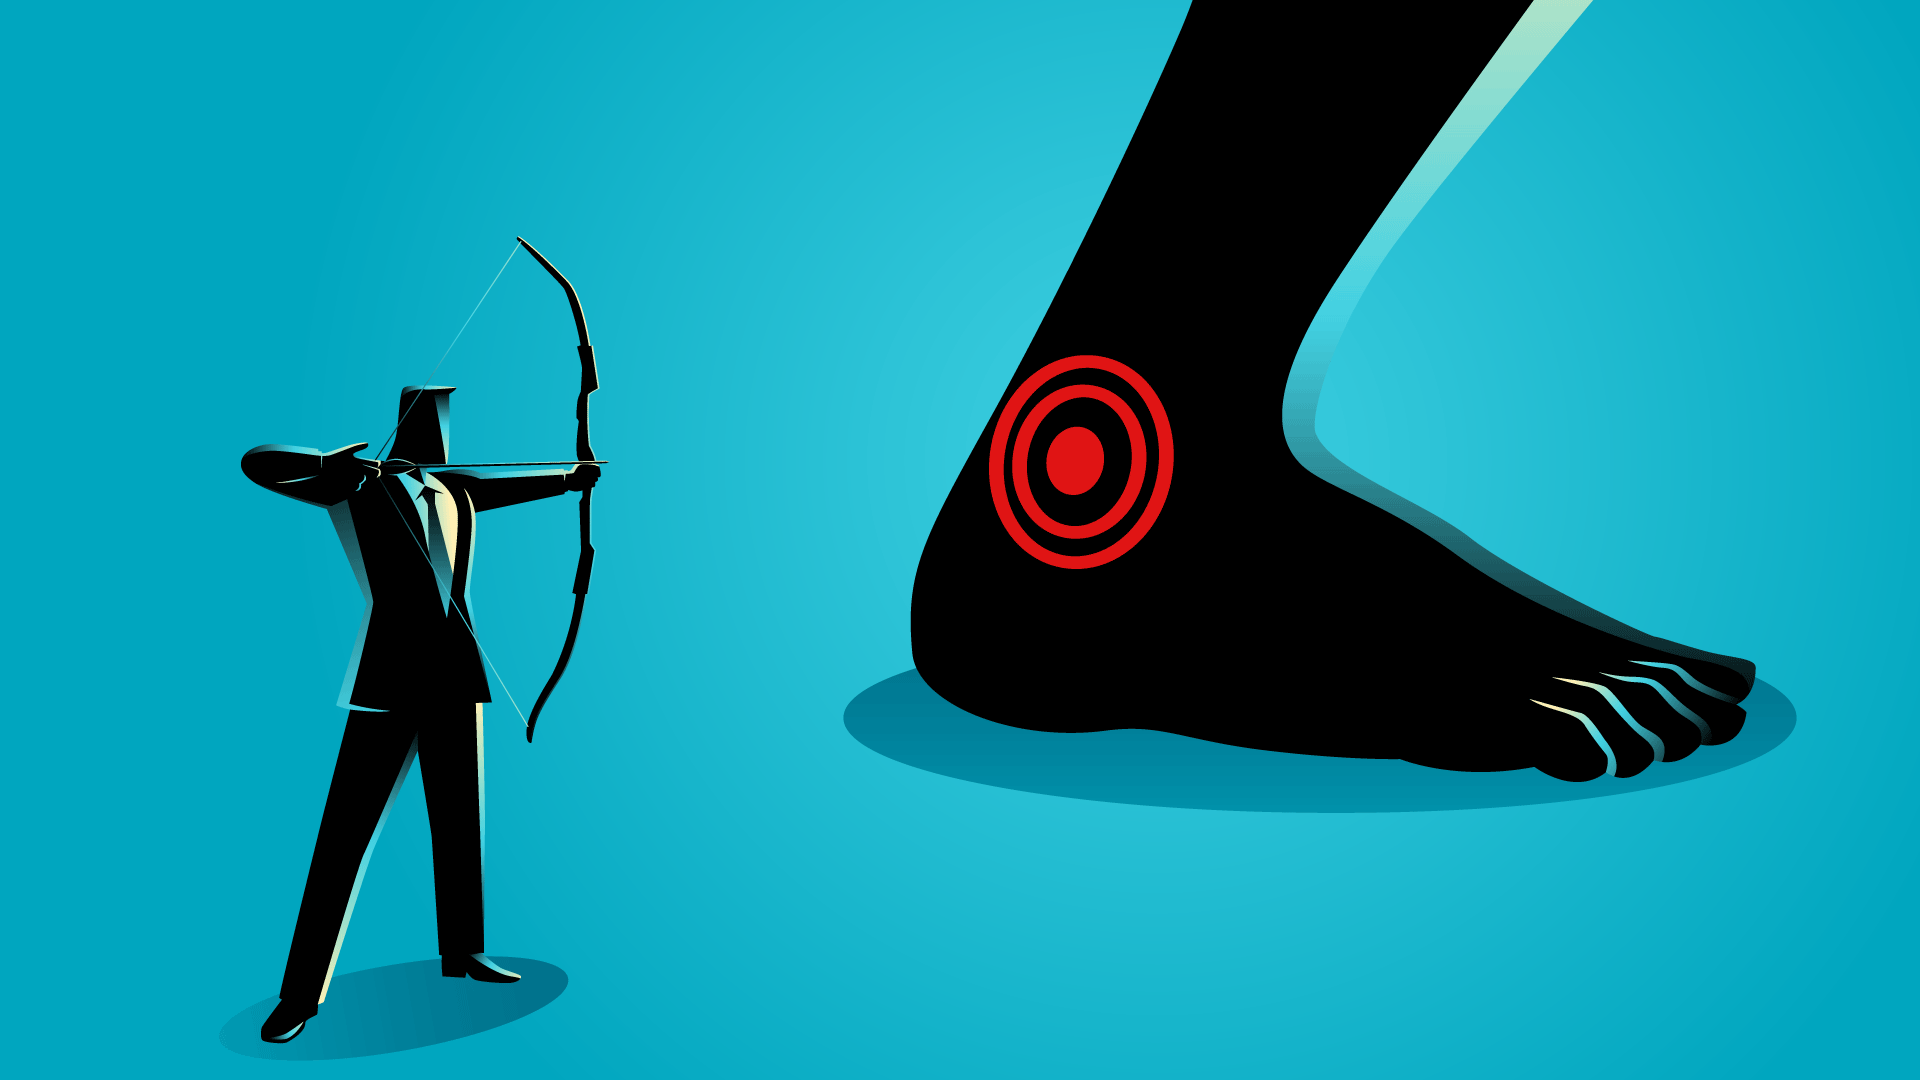 Illustration of archer hitting bullseye on human foot